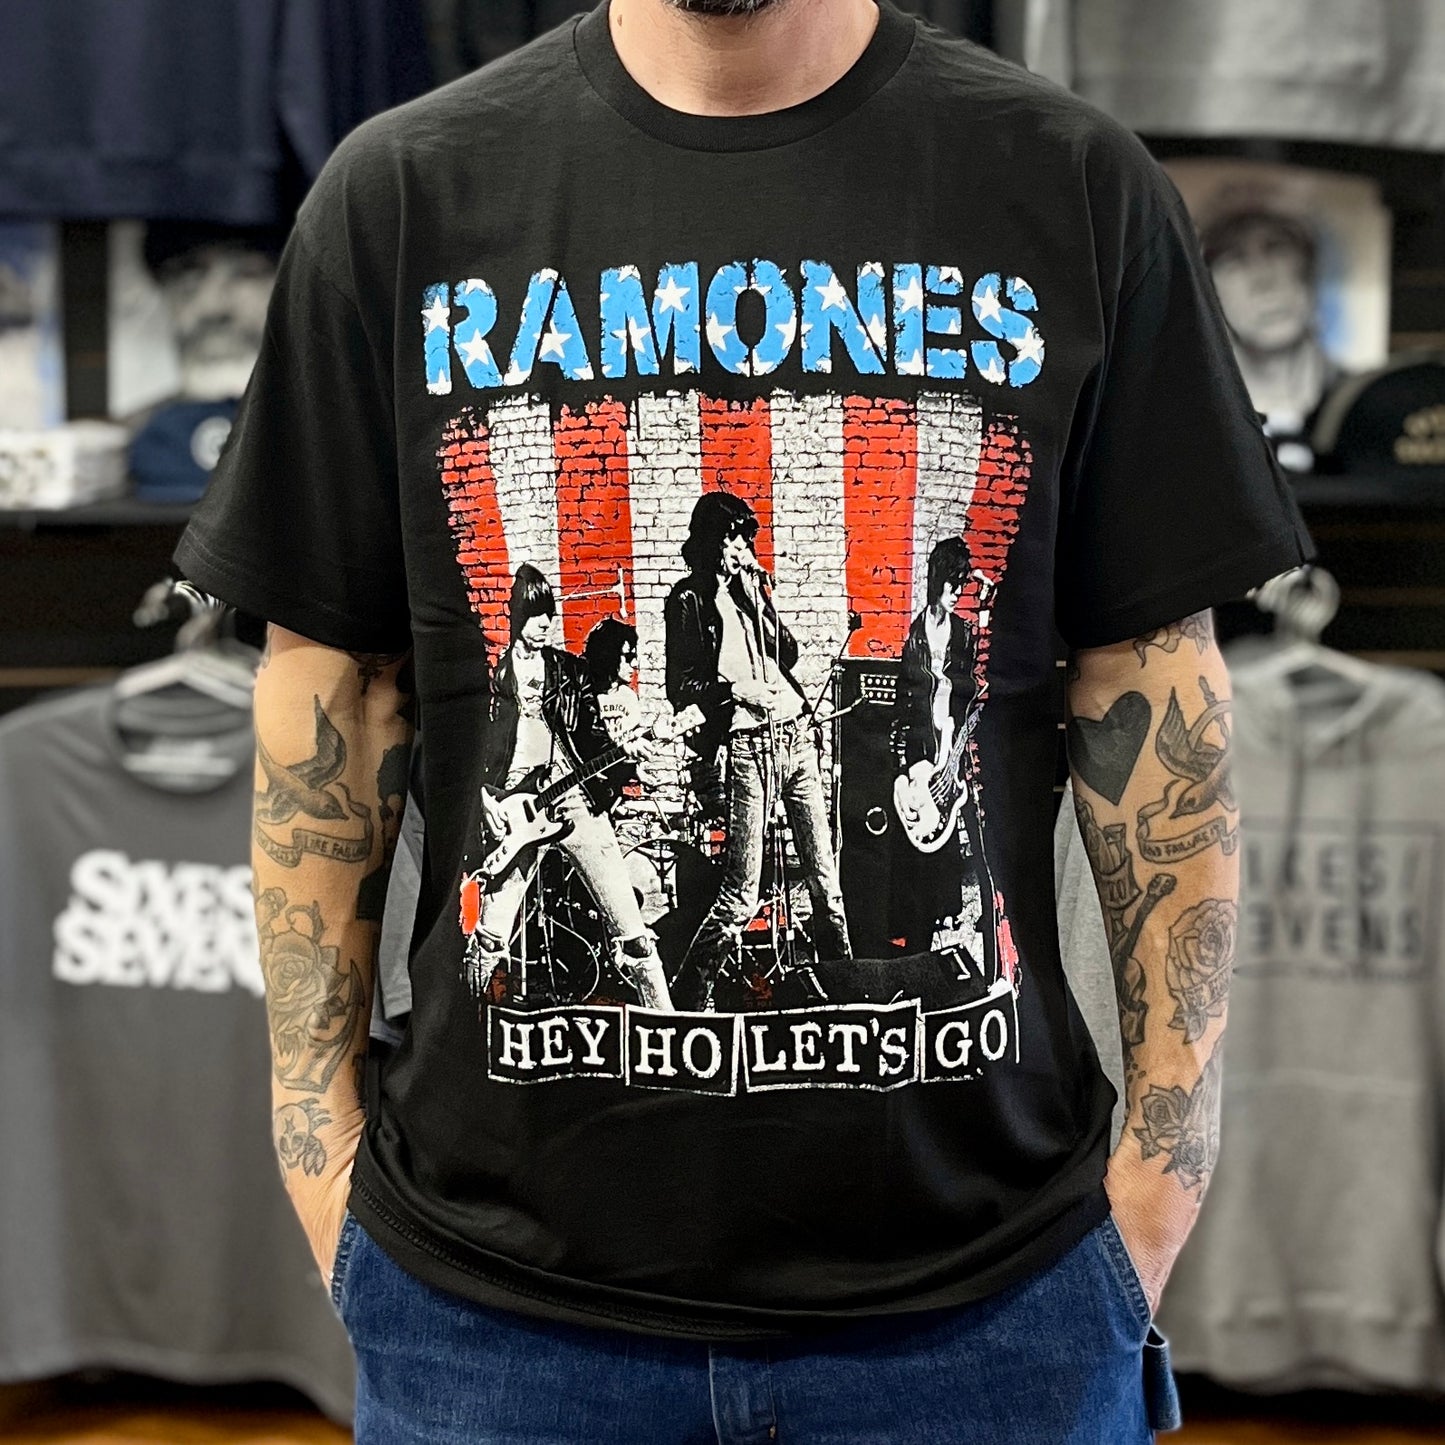 Ramones T-Shirt - Hey Ho Let's Go